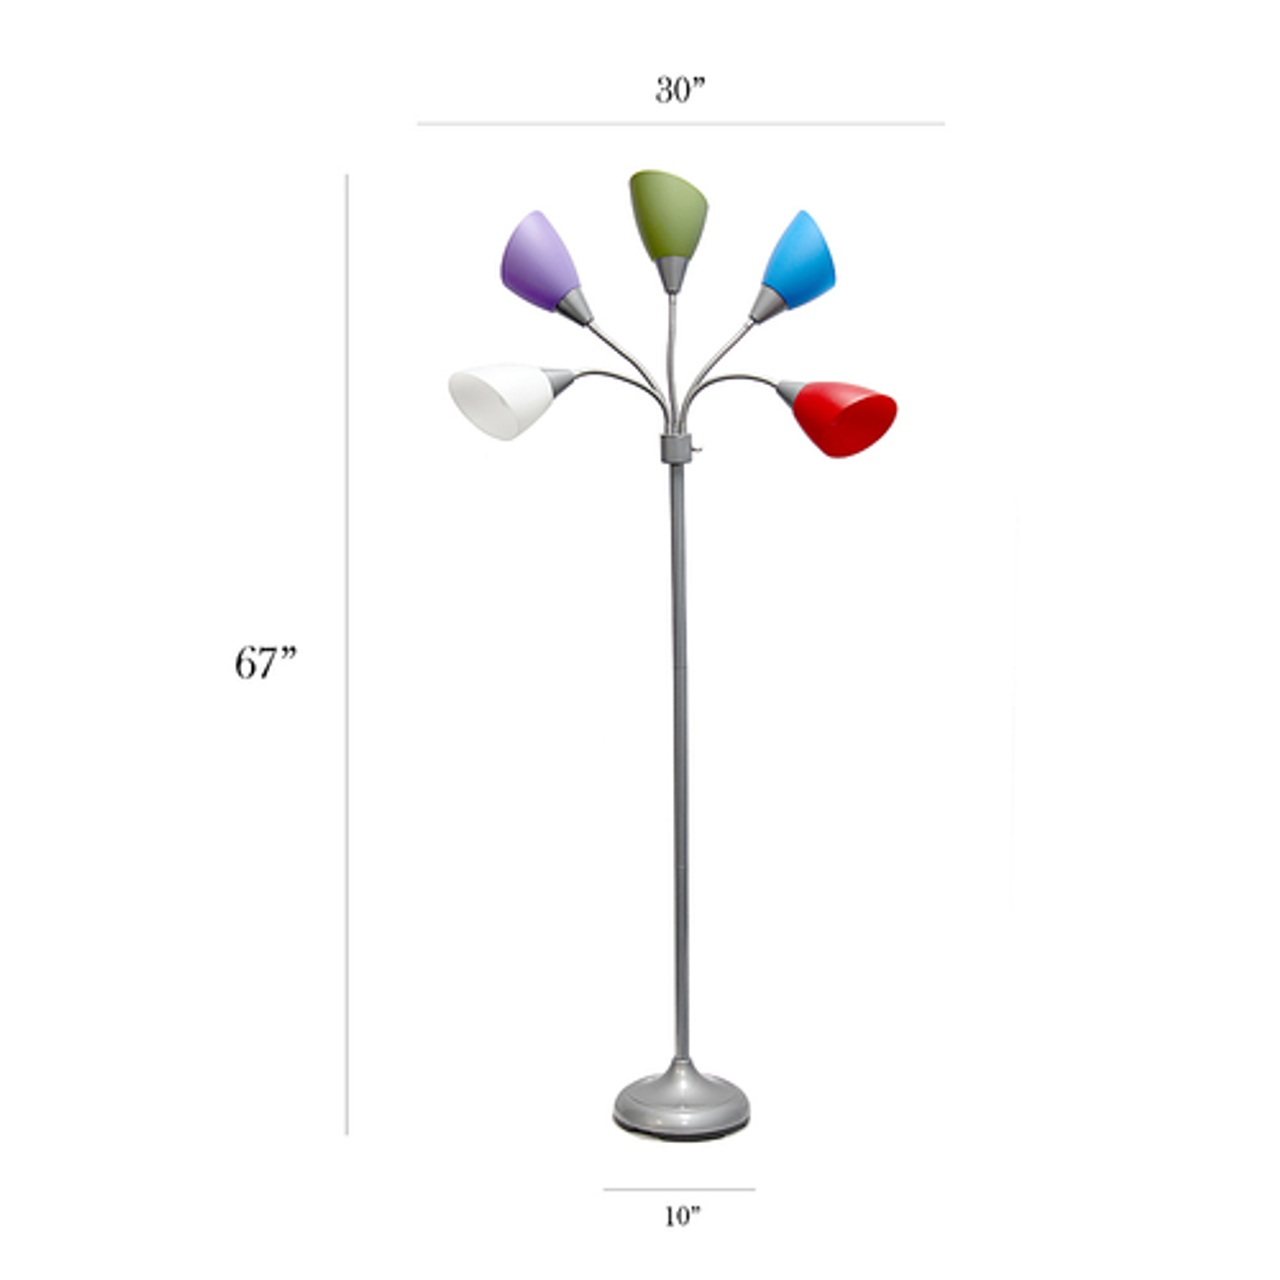 Simple Designs 5 Light Adjustable Gooseneck Floor Lamp - Silver/Primary Multicolored Shades